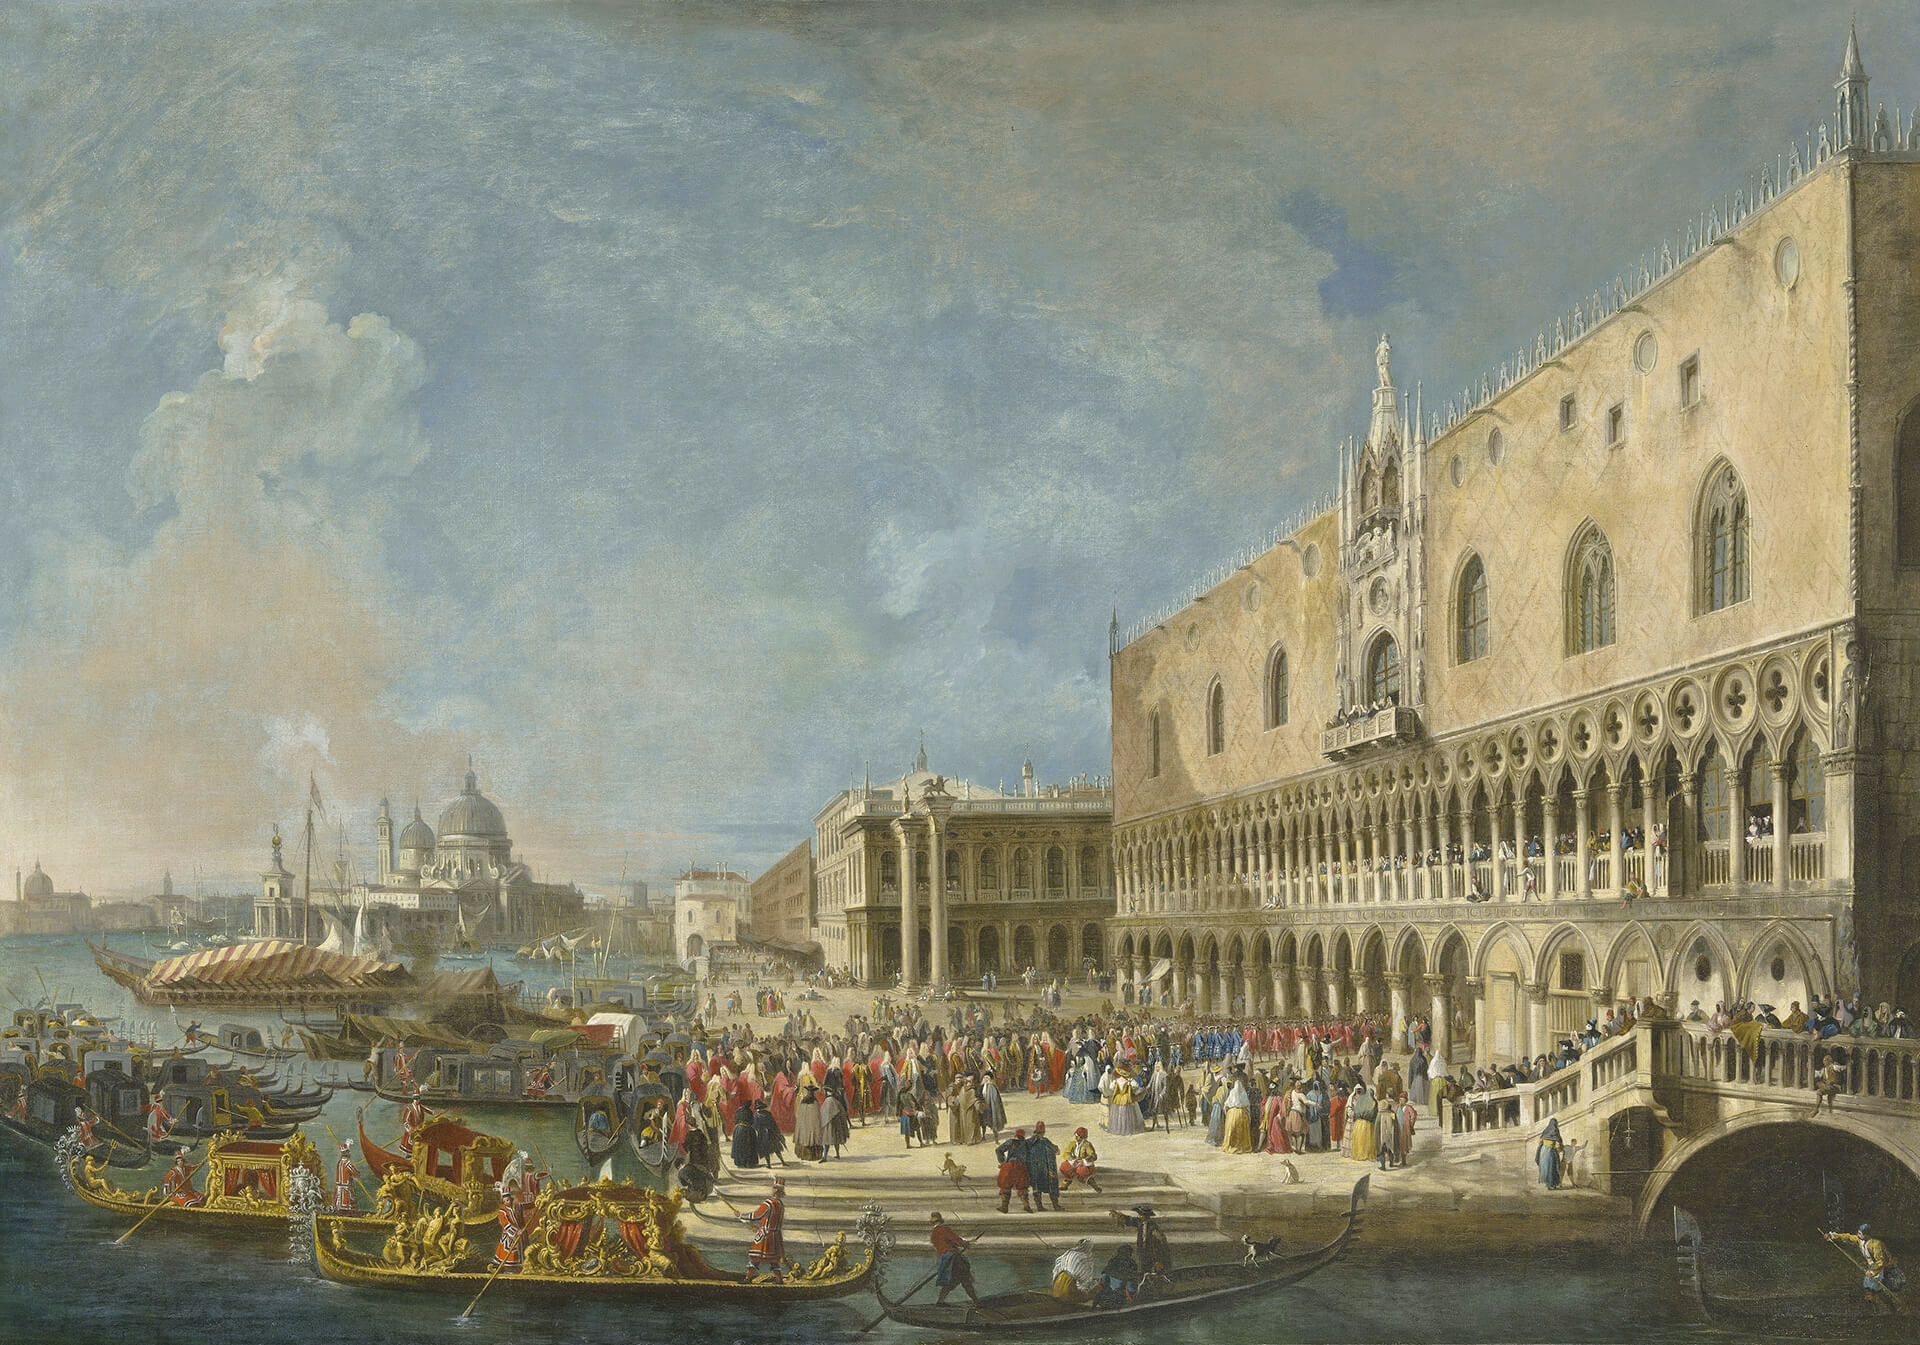 Giovanni Antonio Canal, called Canaletto, and Studio